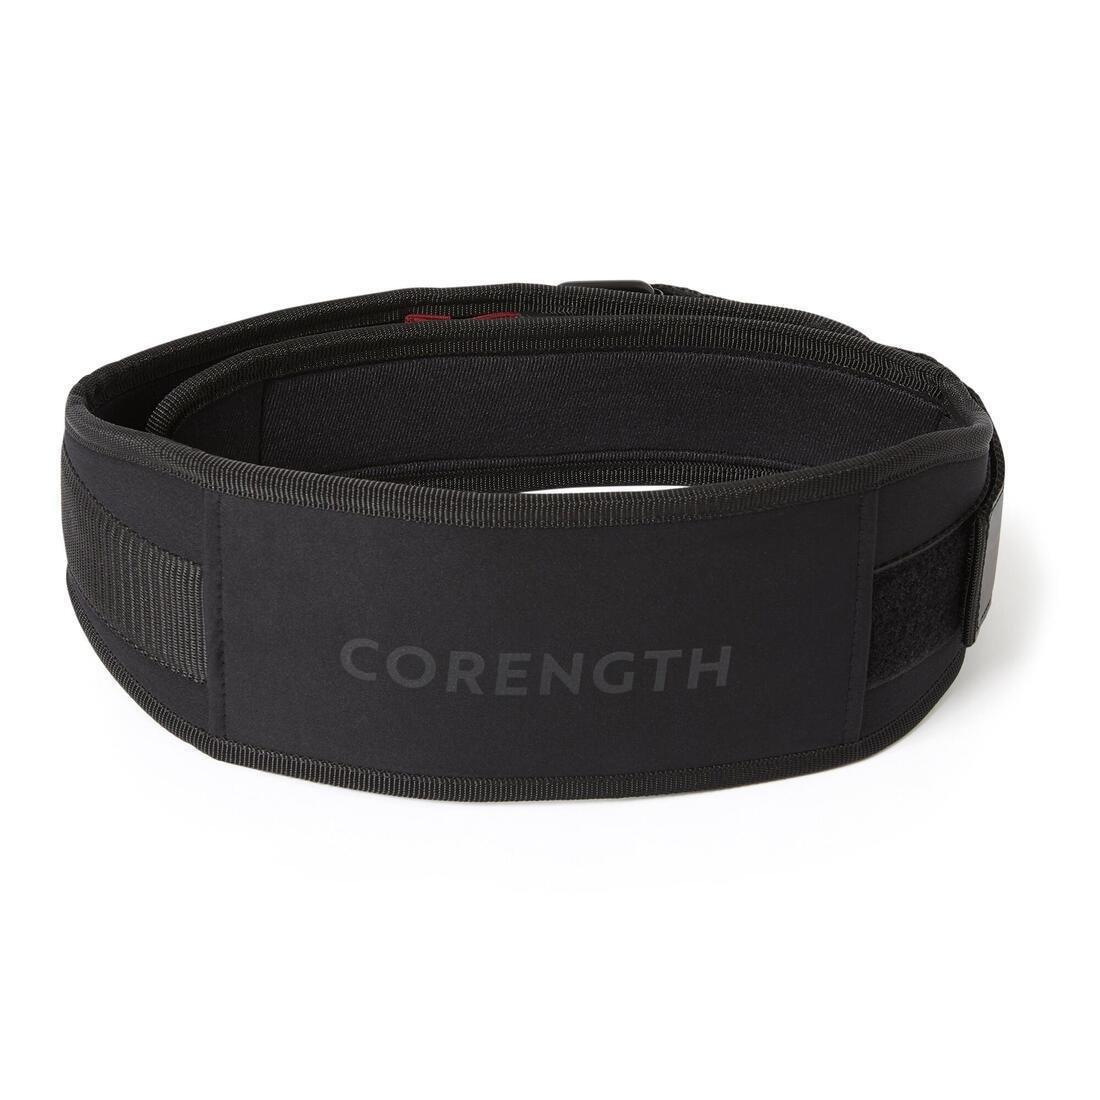 CORENGTH - Weight Lifting Belt, Black